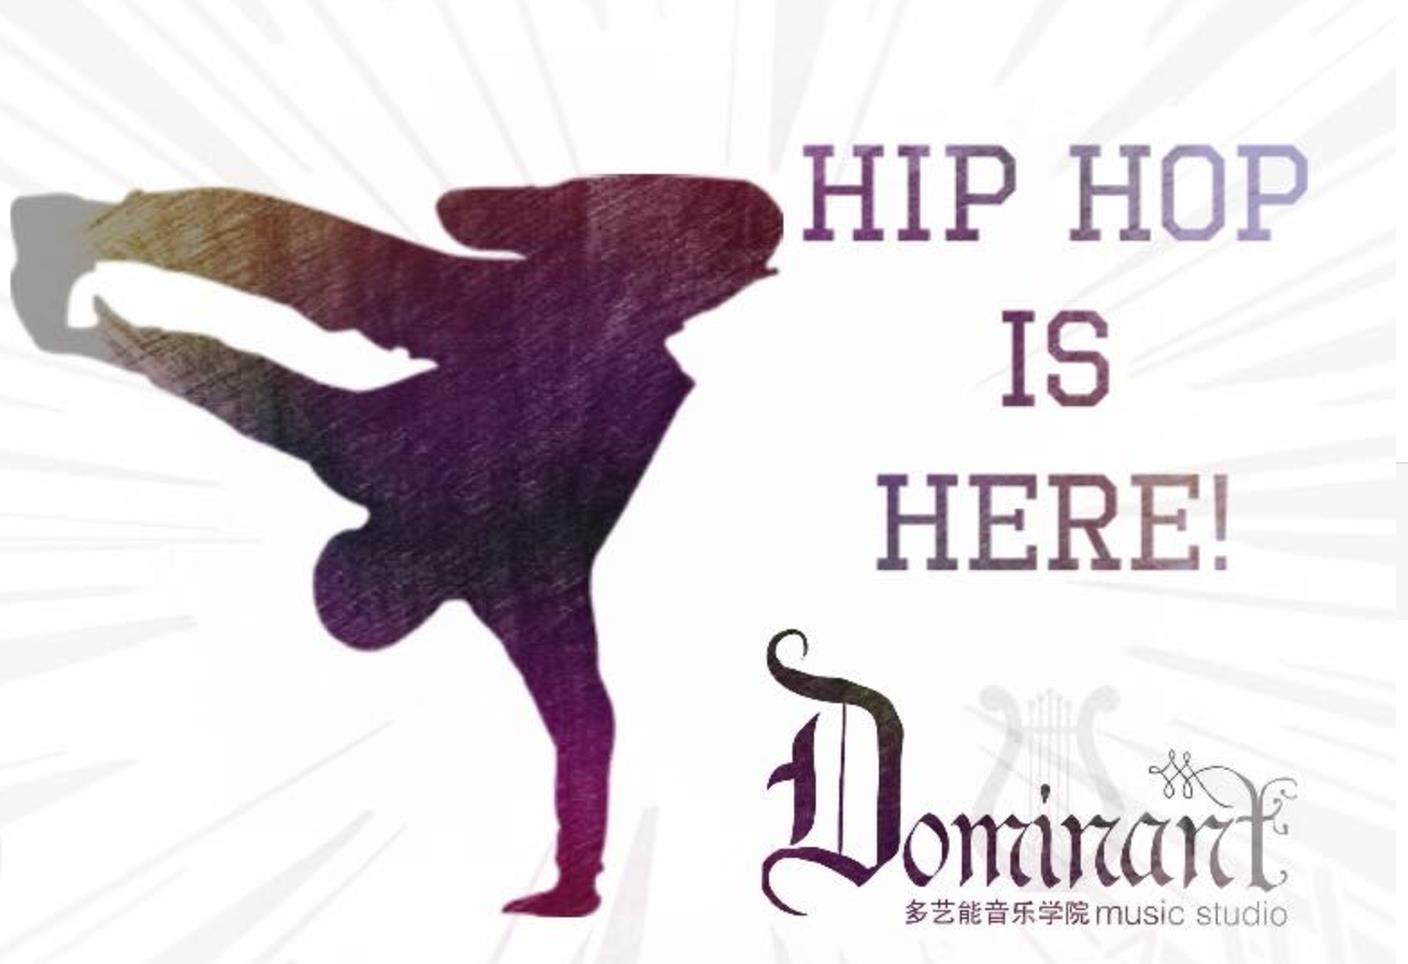 Hip Hop Dance at Puchong Dominant Music Studio by Dominant Music Studio